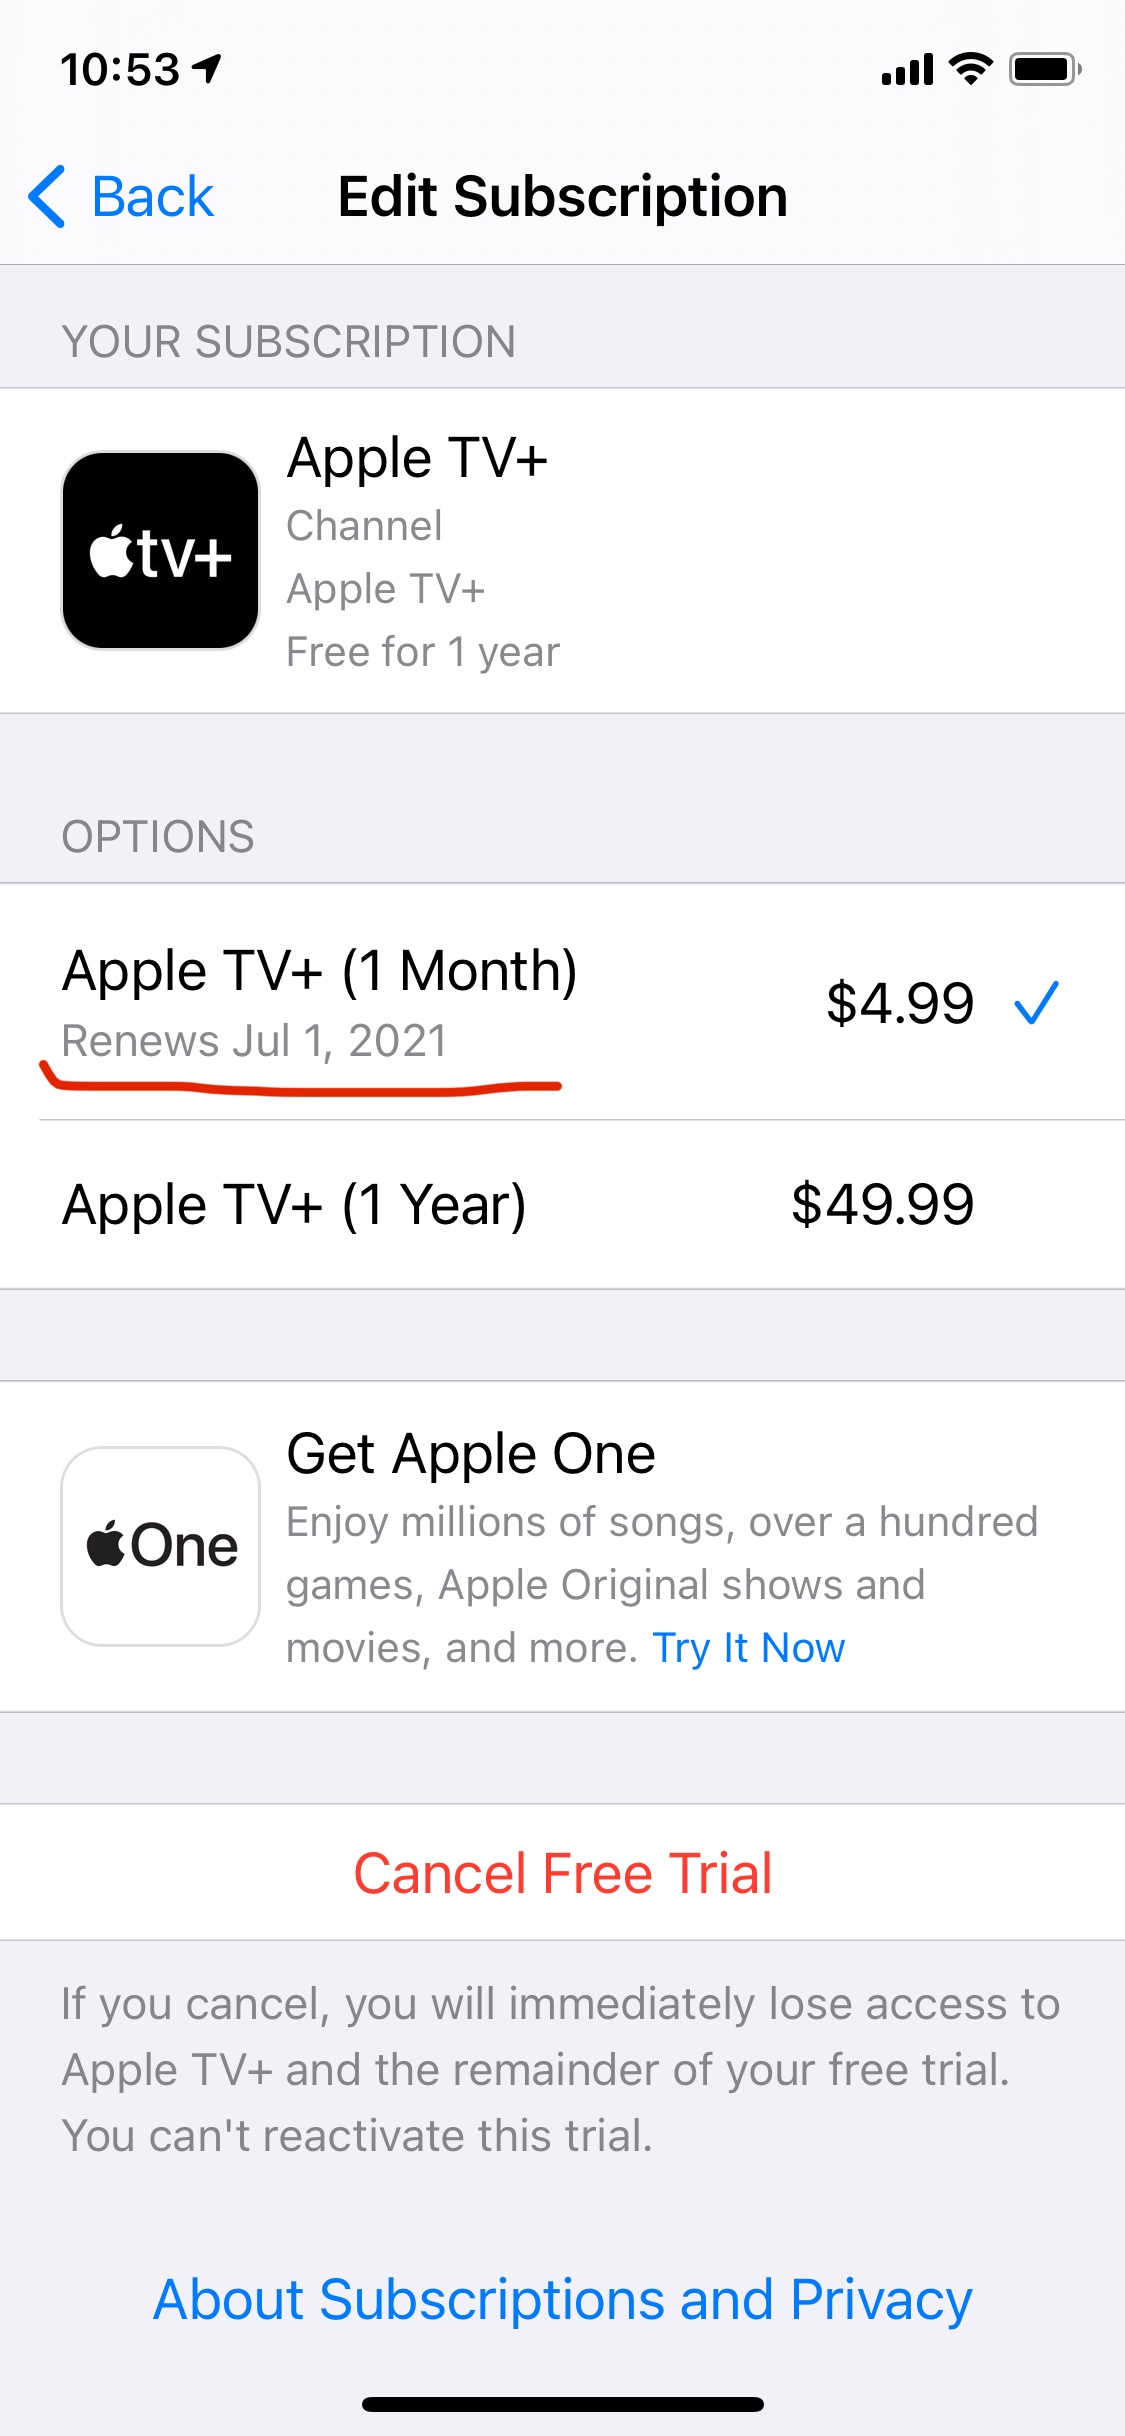 Does free Apple TV expire?